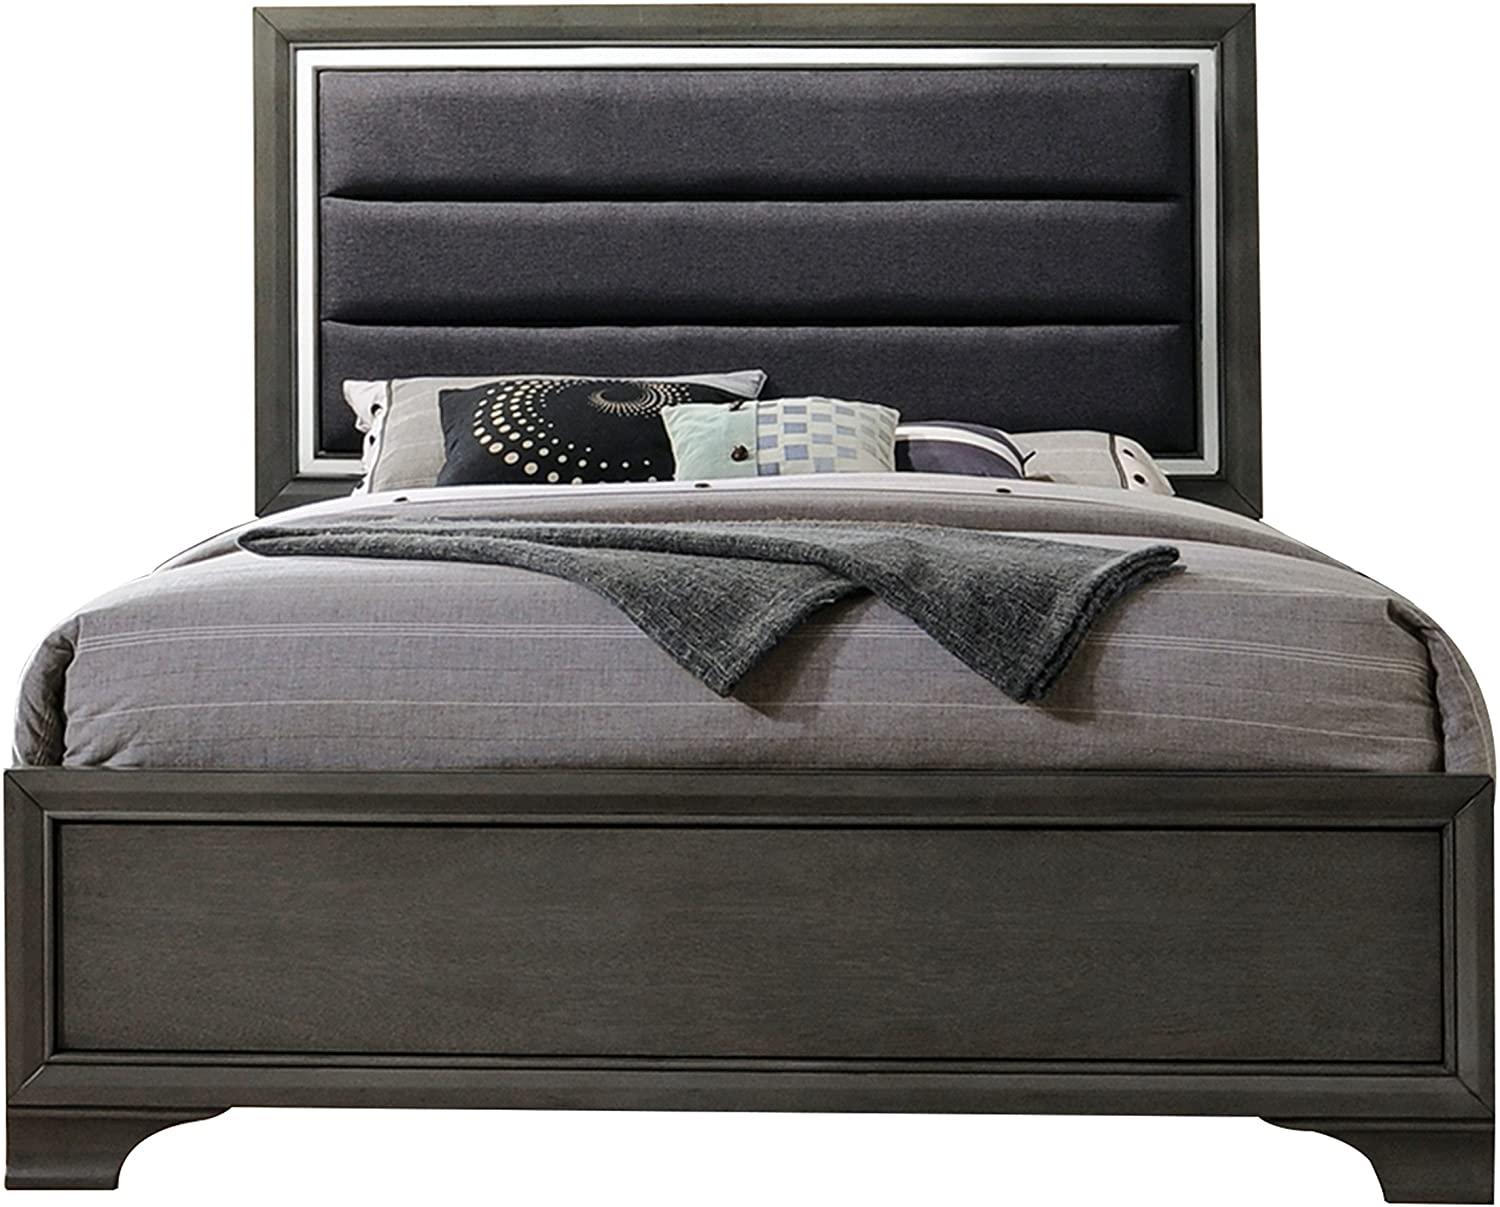 Transitional Panel Bed Carine II-26257EK 26257EK in Charcoal, Gray Fabric